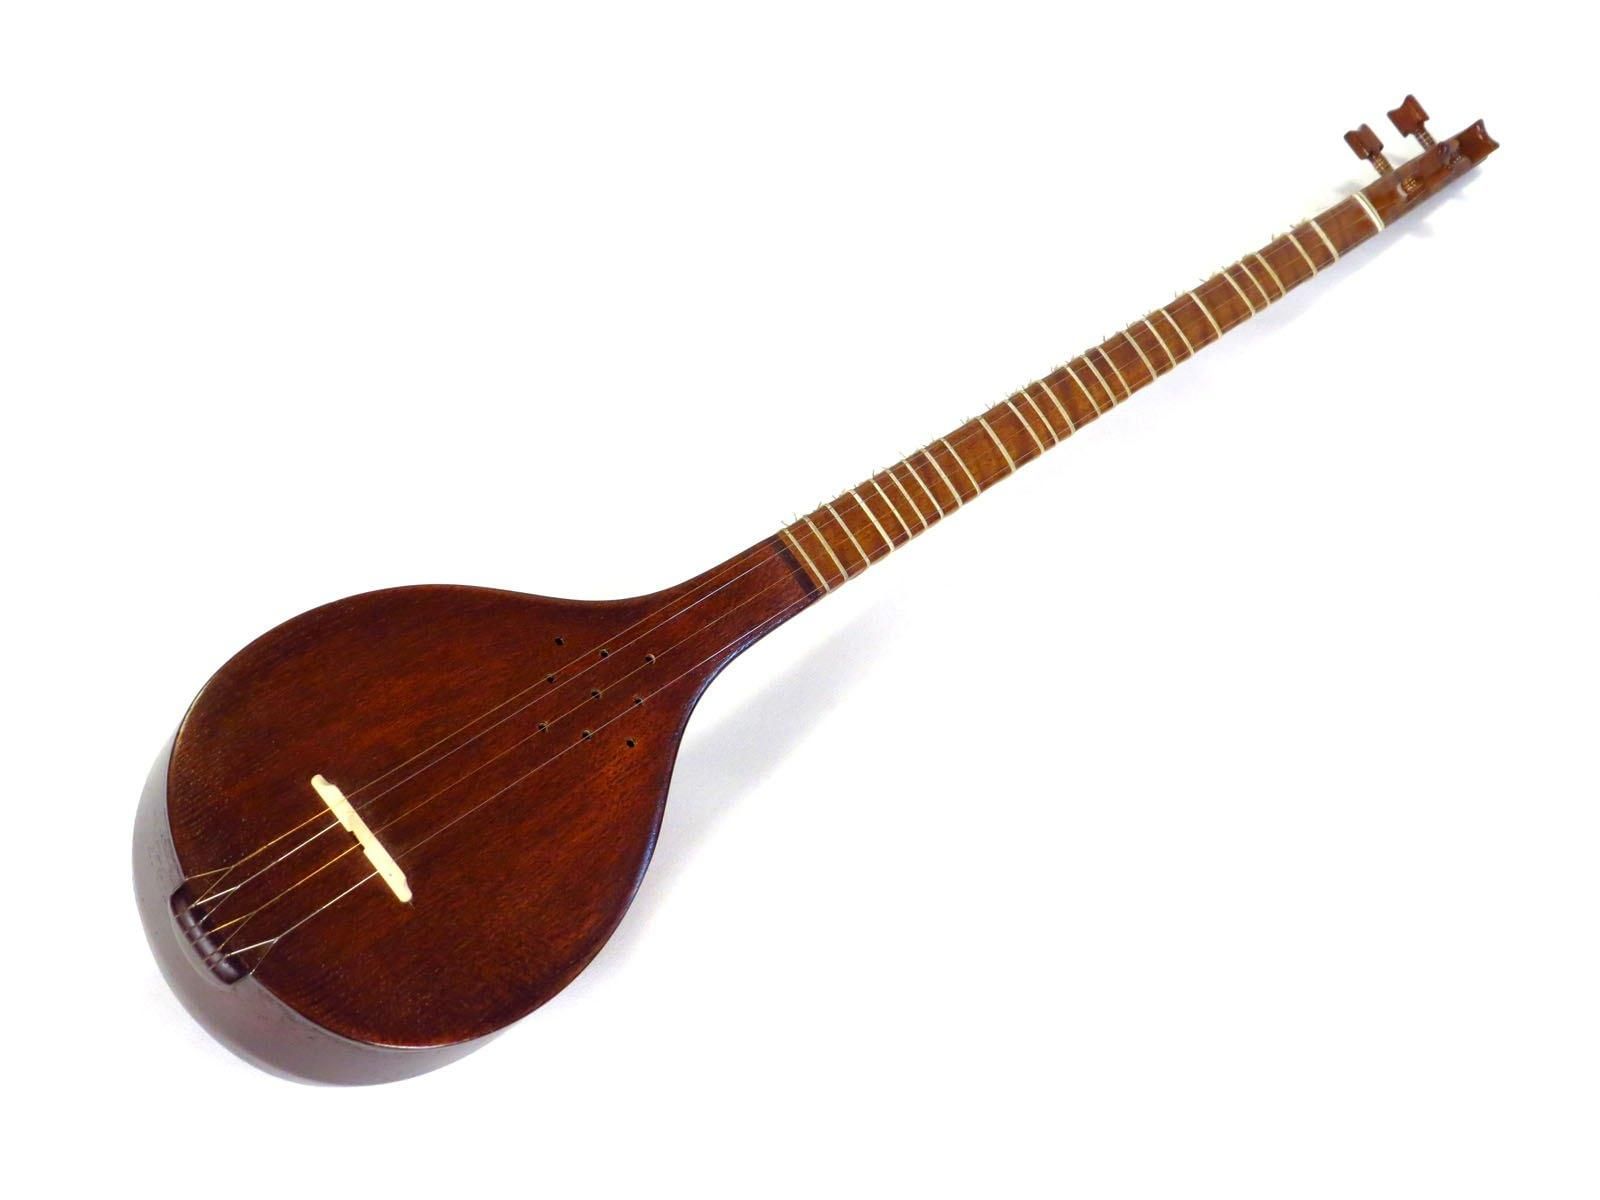 Musiqiy net. Дутар музыкальный инструмент. Туркменский дутар музыкальный инструмент. Узбекские музыкальные инструменты дутар. Узбекский струнный музыкальный инструмент рубаб.